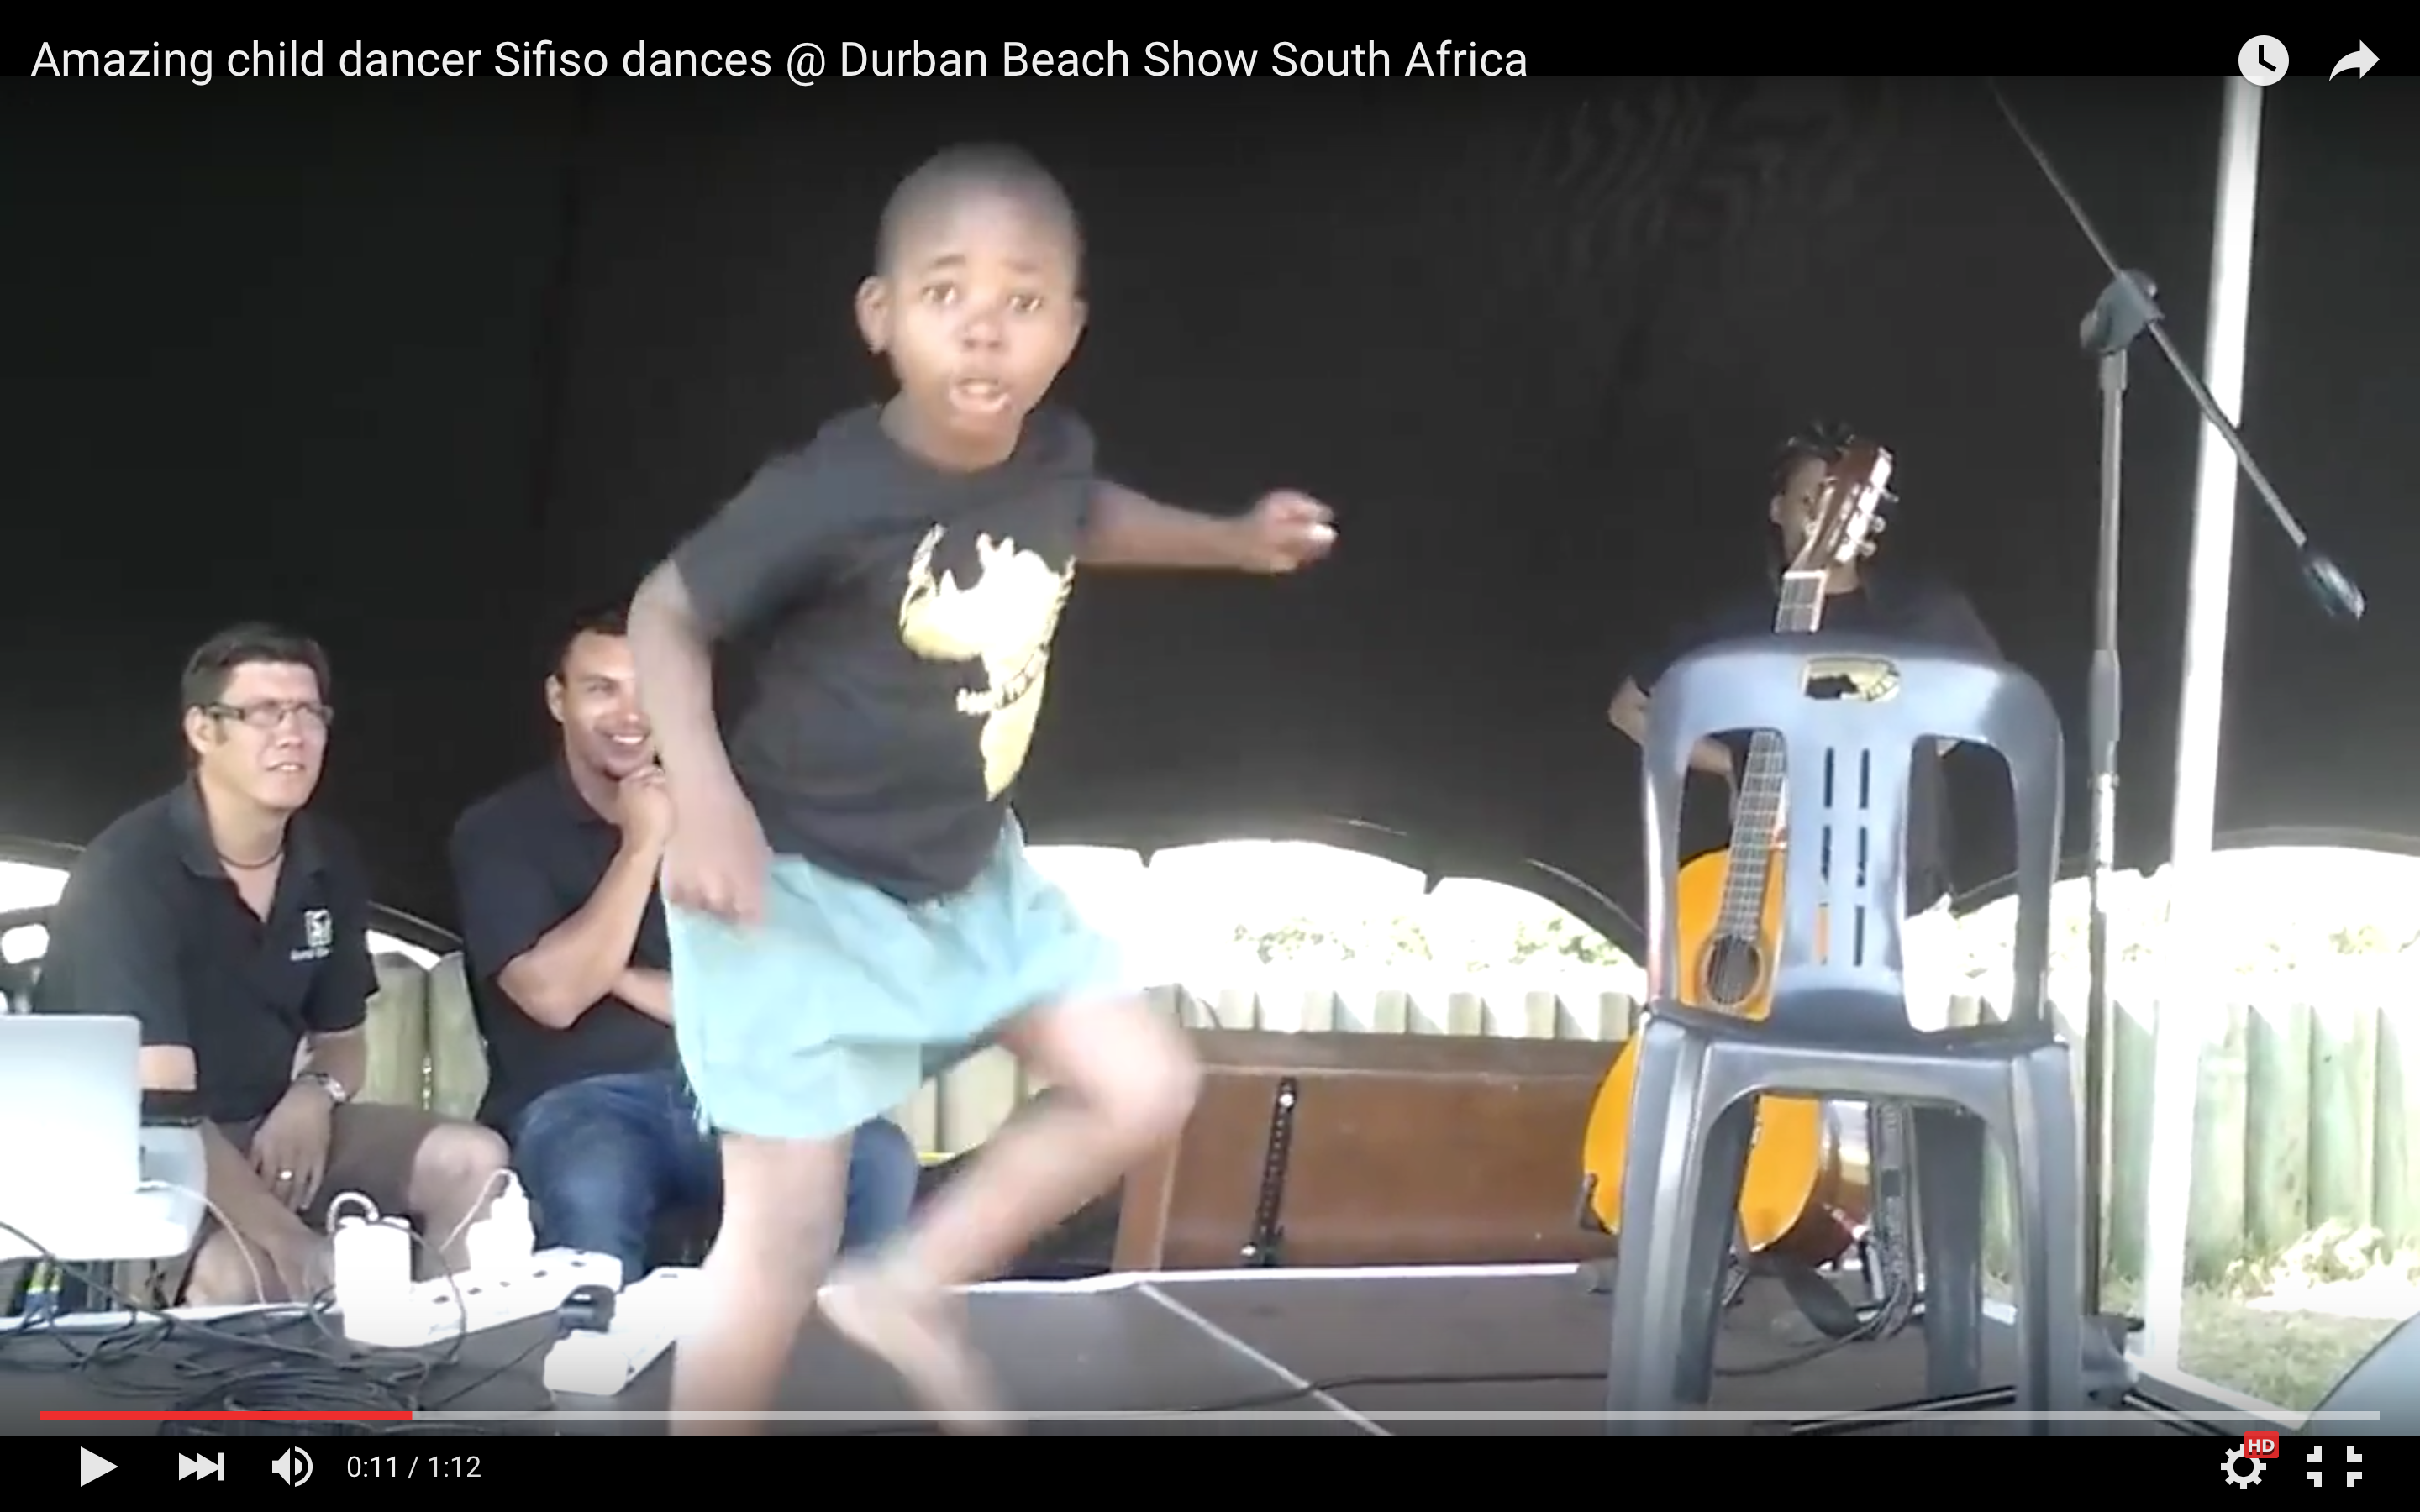 Sifiso dances @ Durban Beach Show South Africa